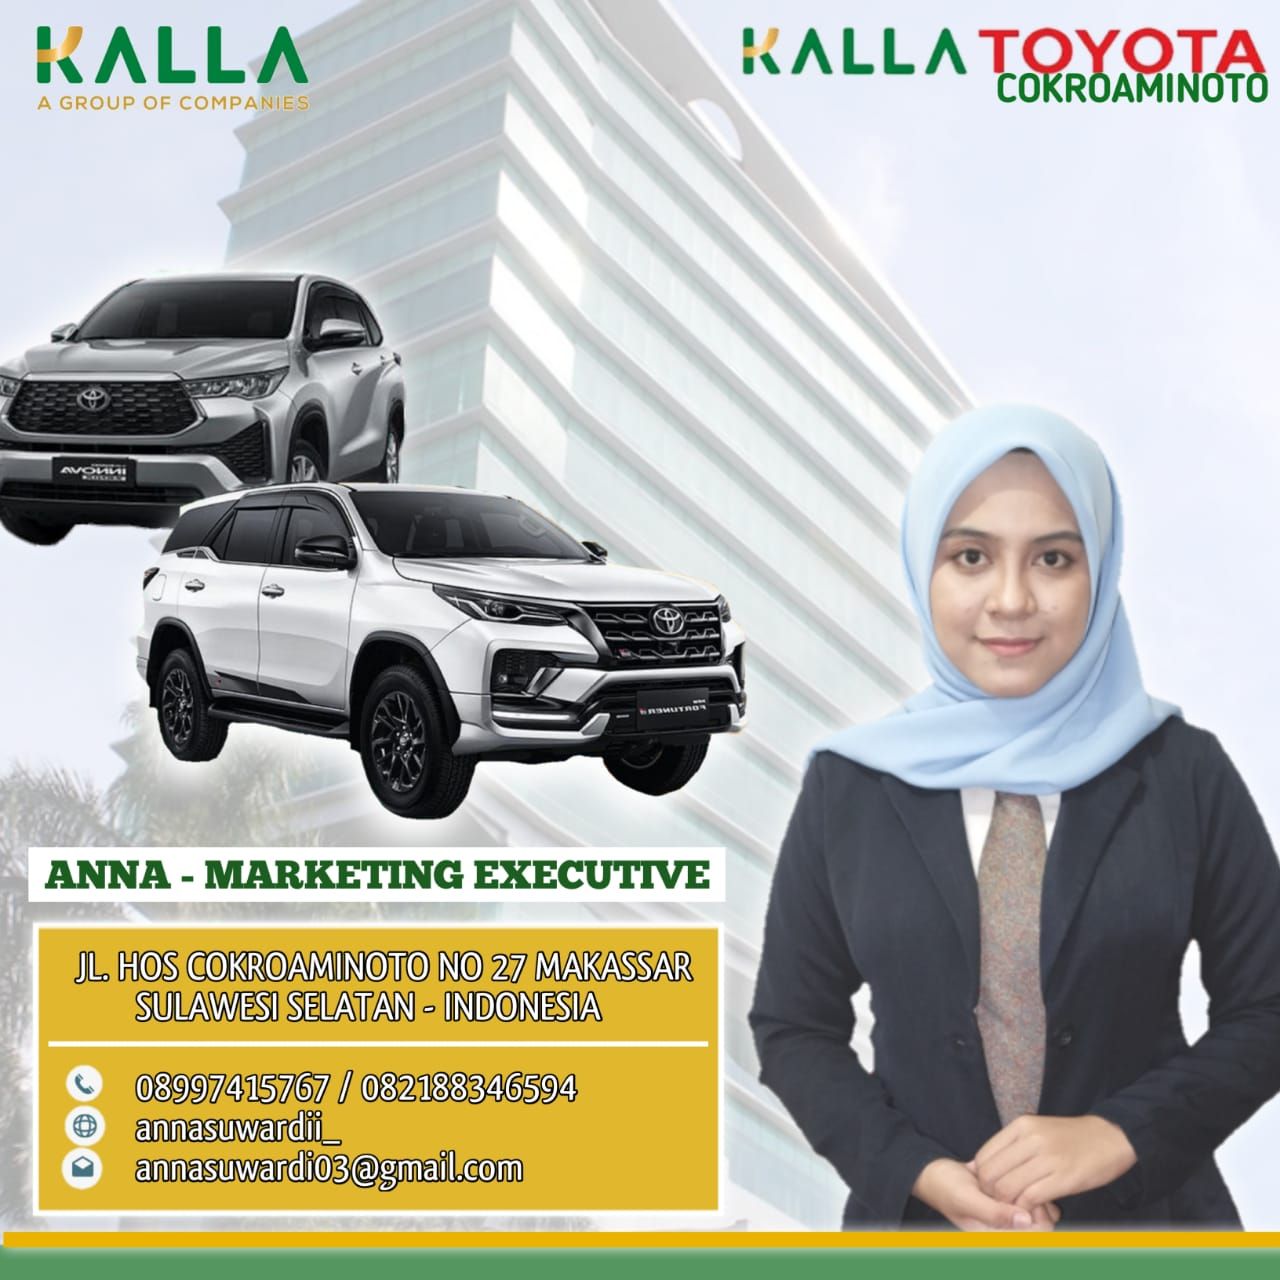 Kontak sales marketing PT. Hadji Kalla